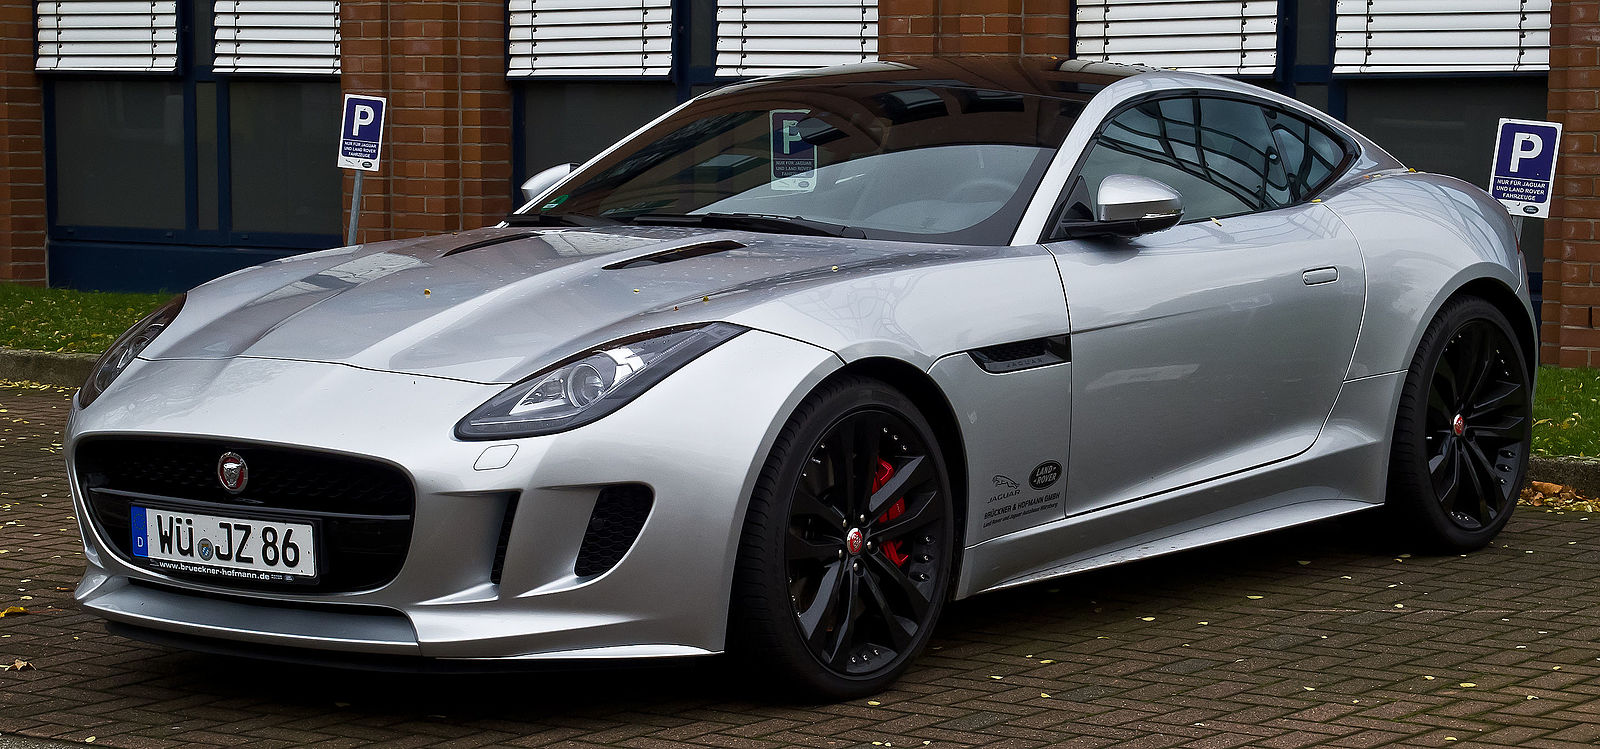 Jaguar, F-type, car, trademark